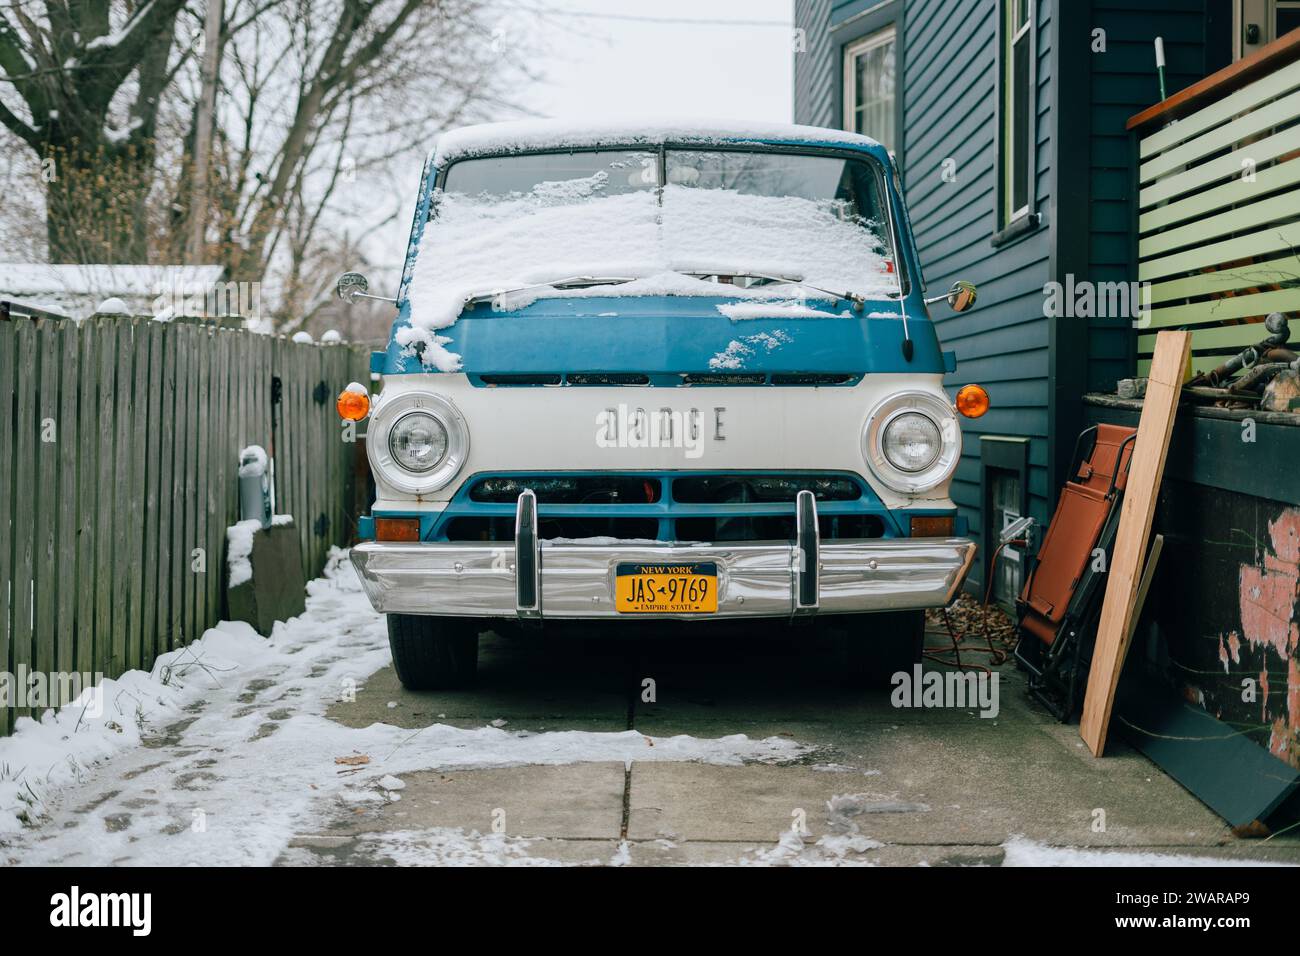 A vintage Dodge van in Allentown, Buffalo, New York Stock Photo